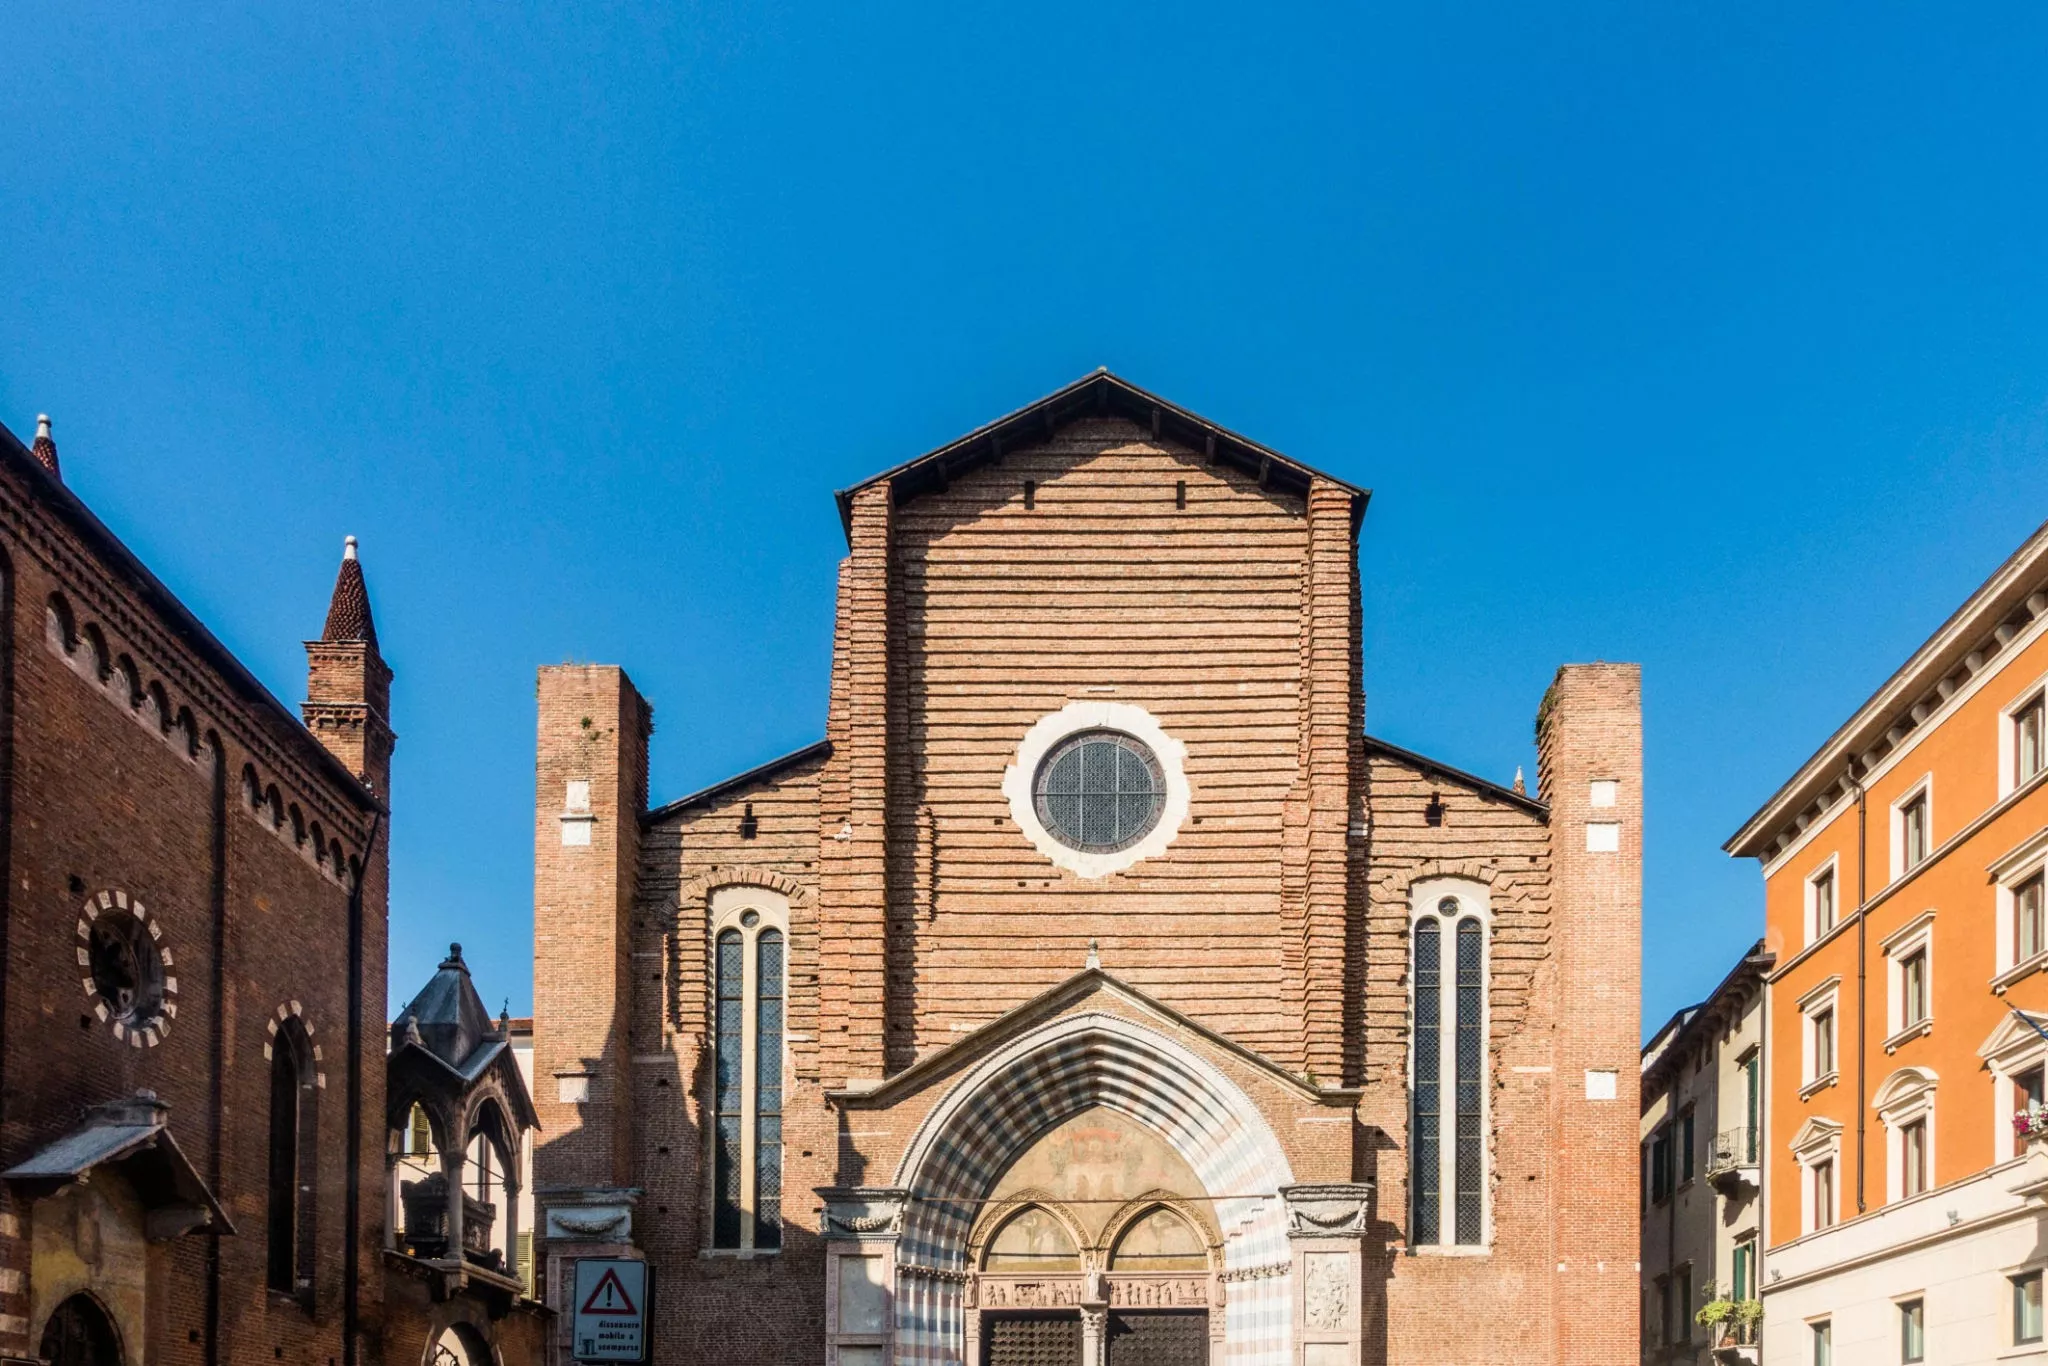 Santa Anastasia in Italy, Europe | Architecture - Rated 3.8